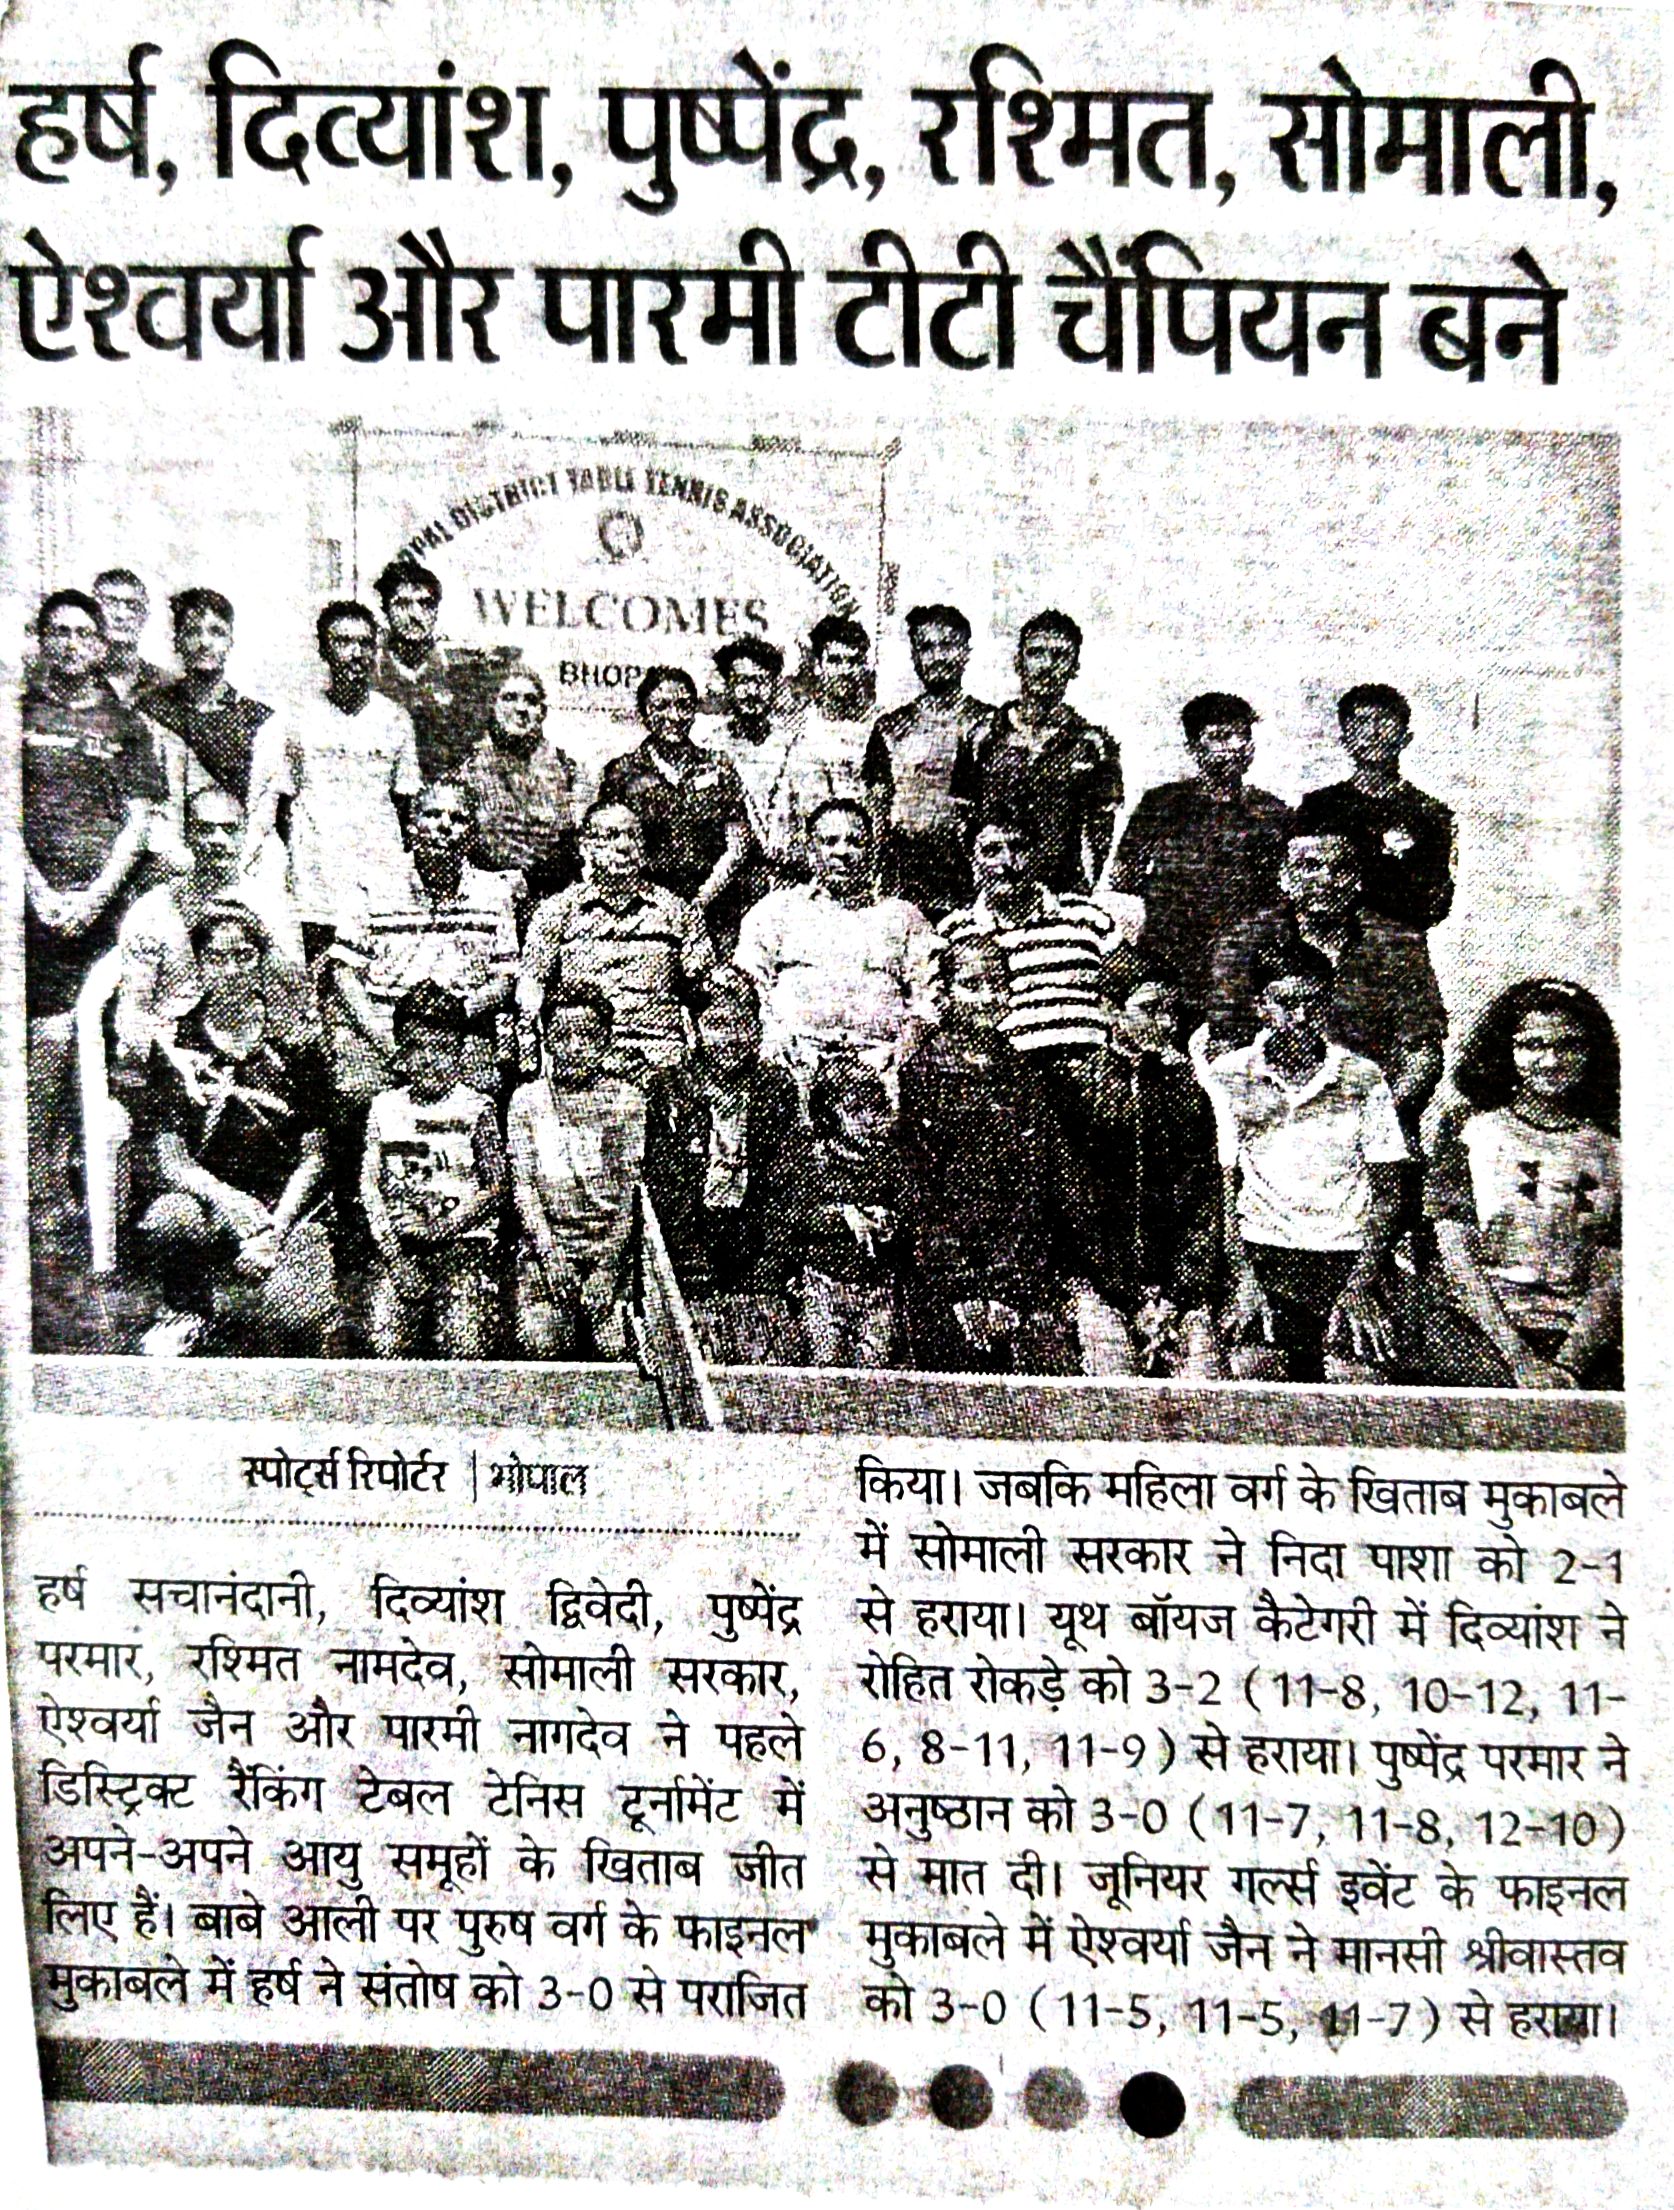 ‘Winners of Table Tennis Championship’ - City Bhaskar - Ryan International School, Bhopal